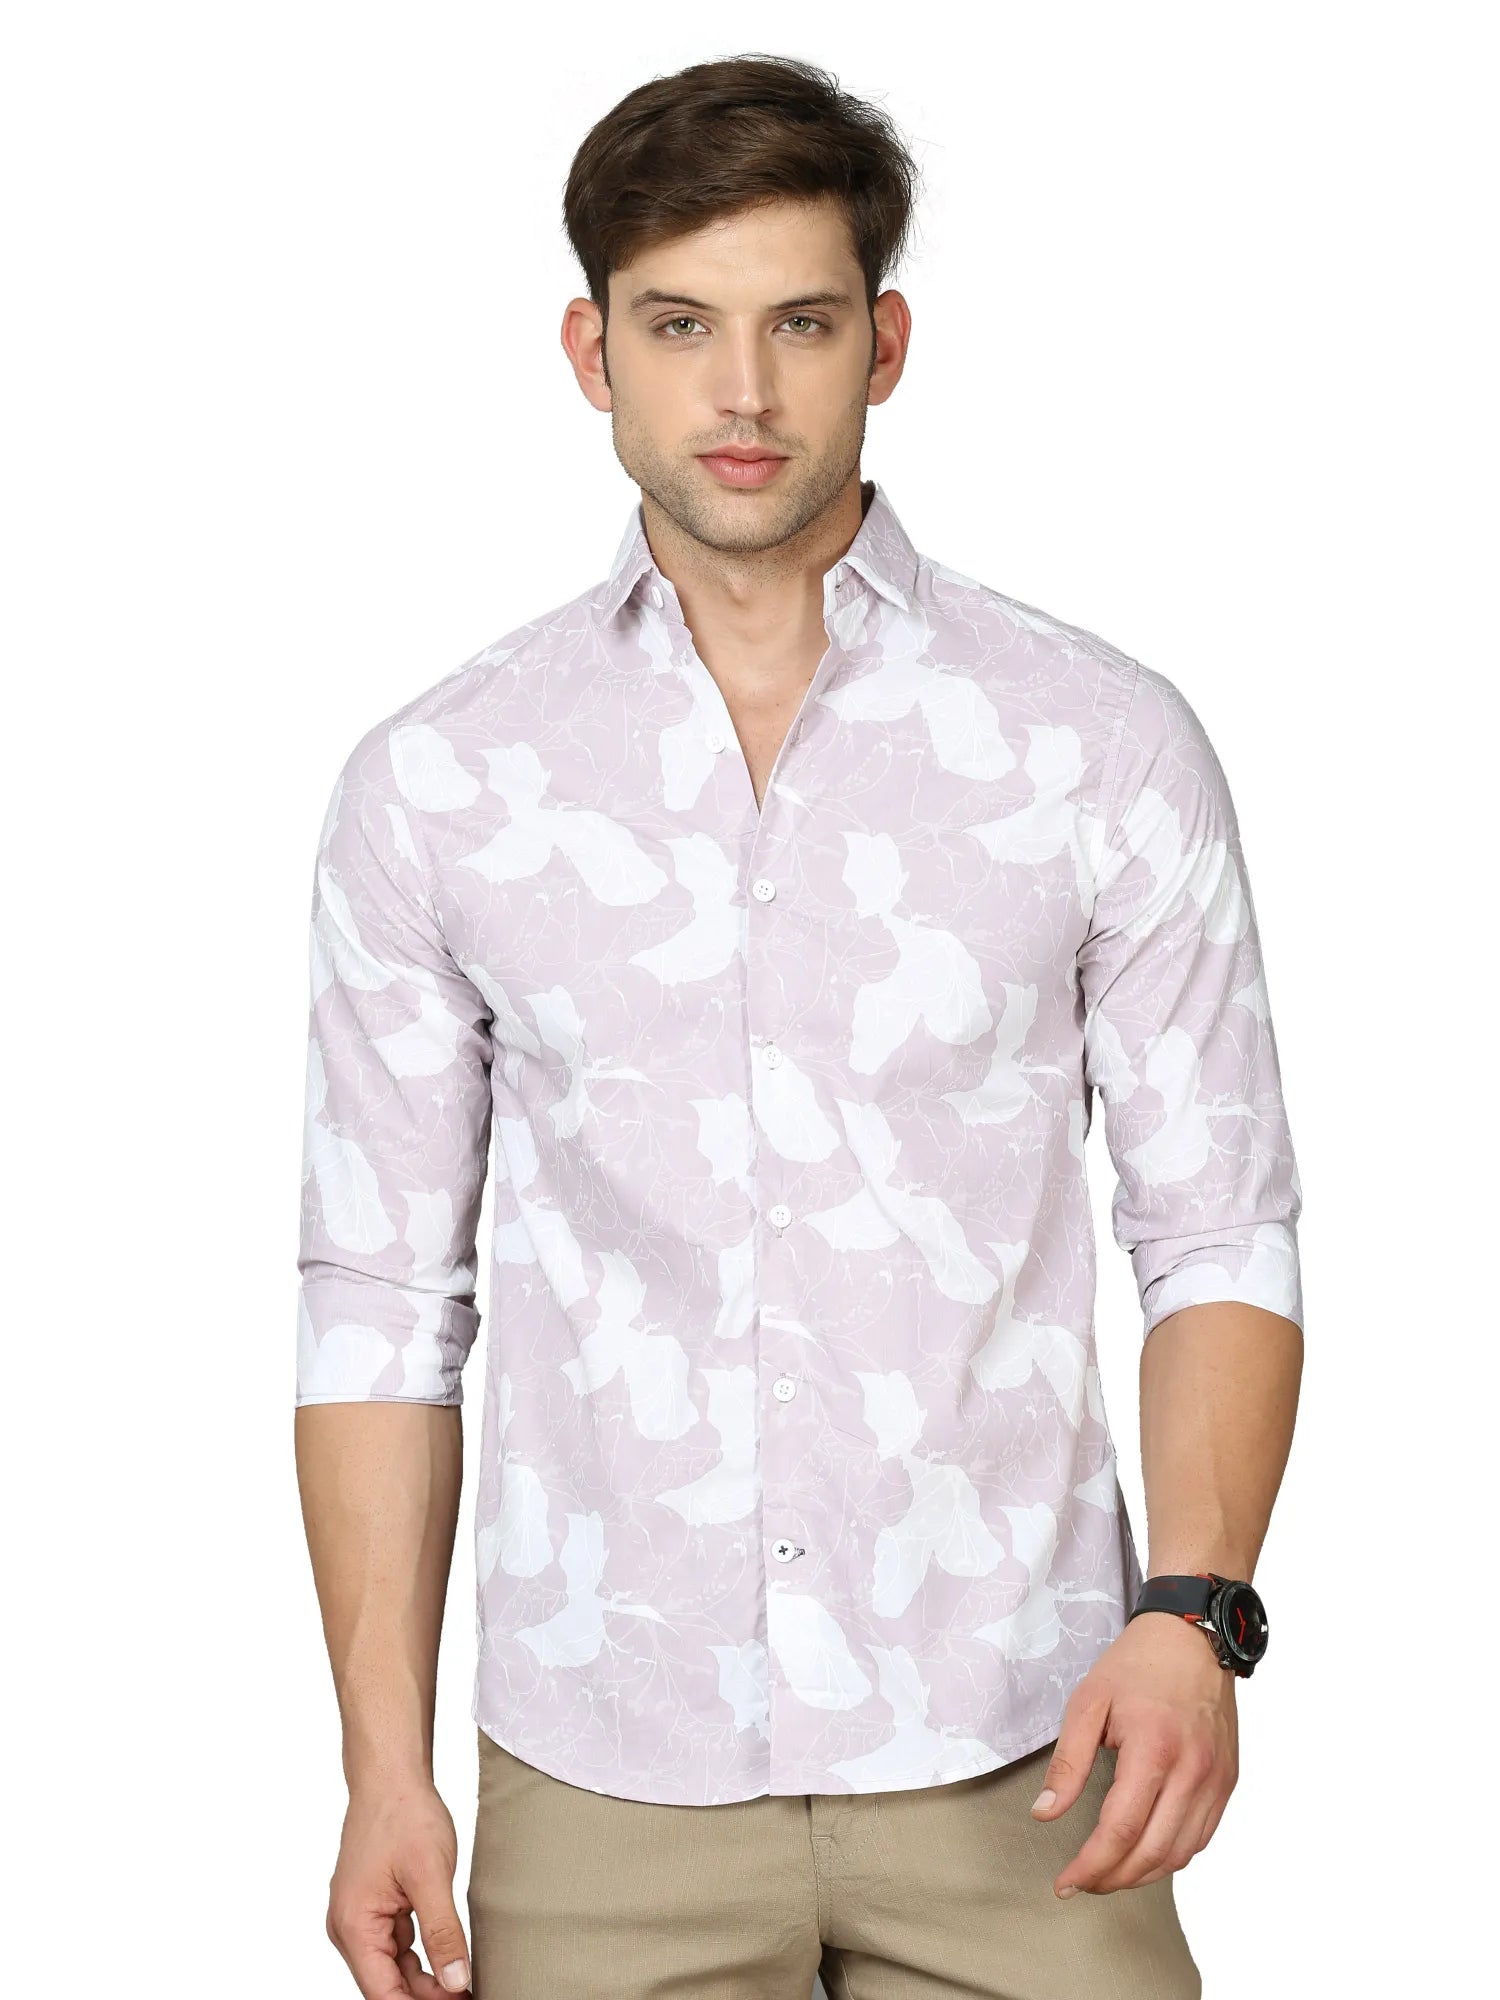 Expressive Prints Shirt for Men 